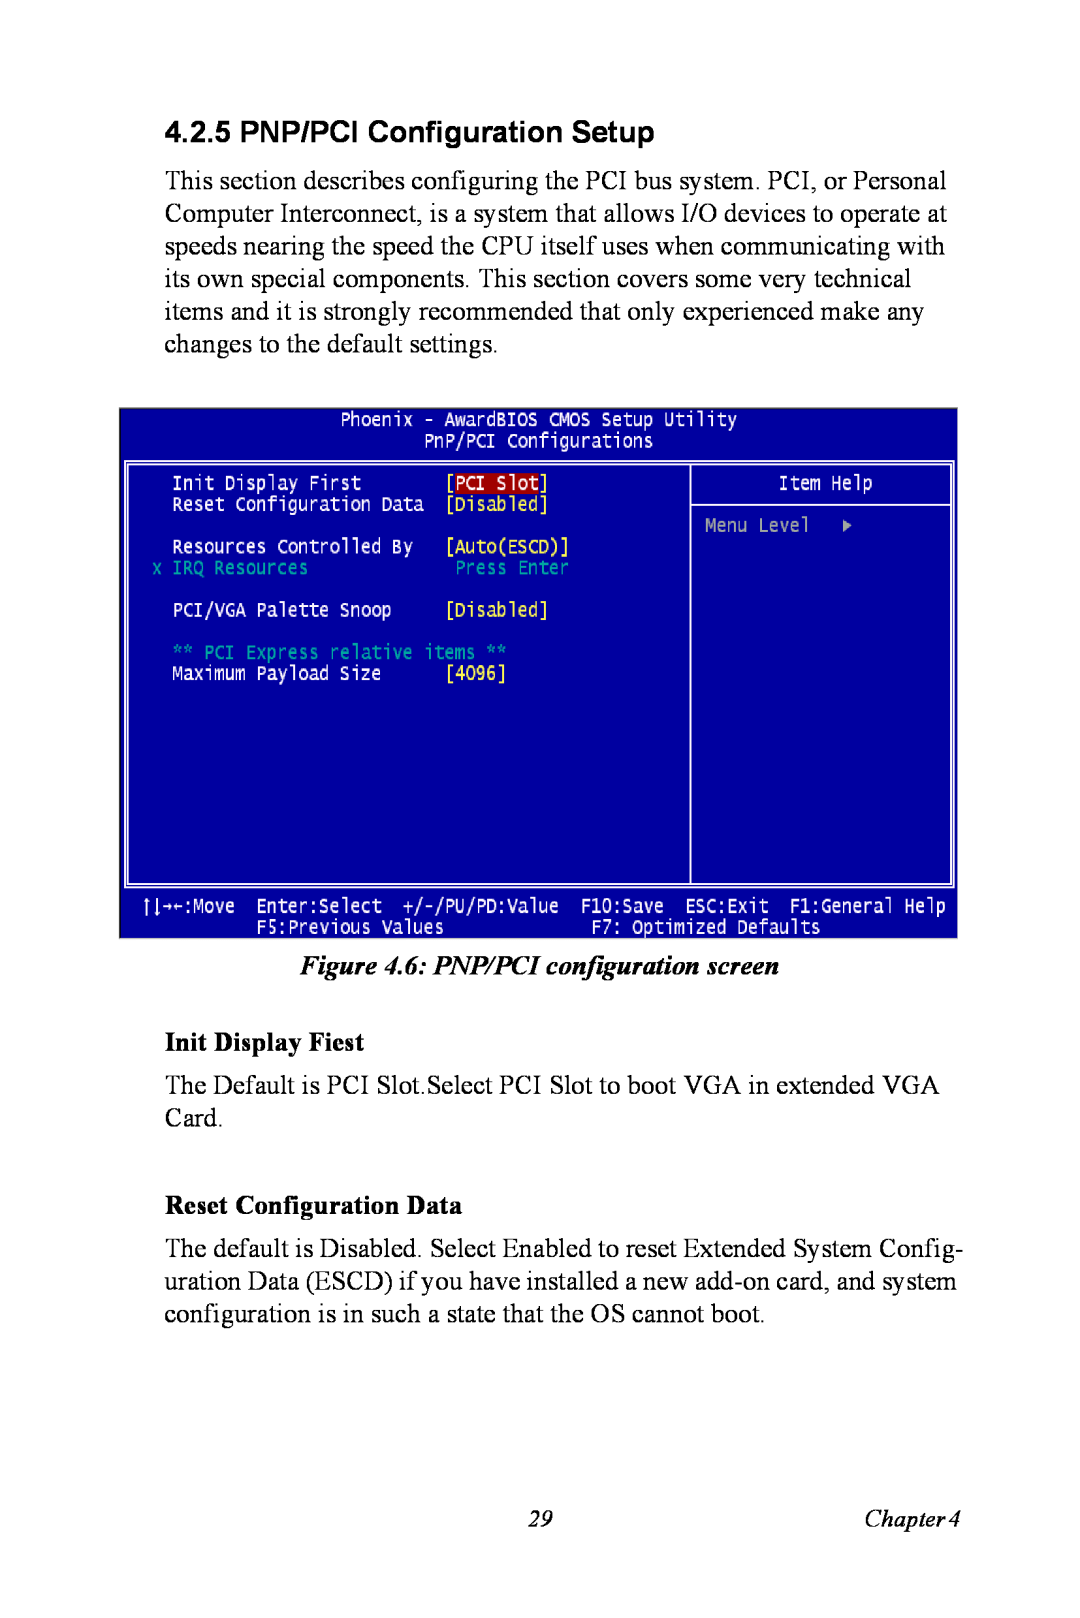 Intel 3U Compact PCI, MIC-3321 4.2.5 PNP/PCI Configuration Setup, 6: PNP/PCI configuration screen, Init Display Fiest 